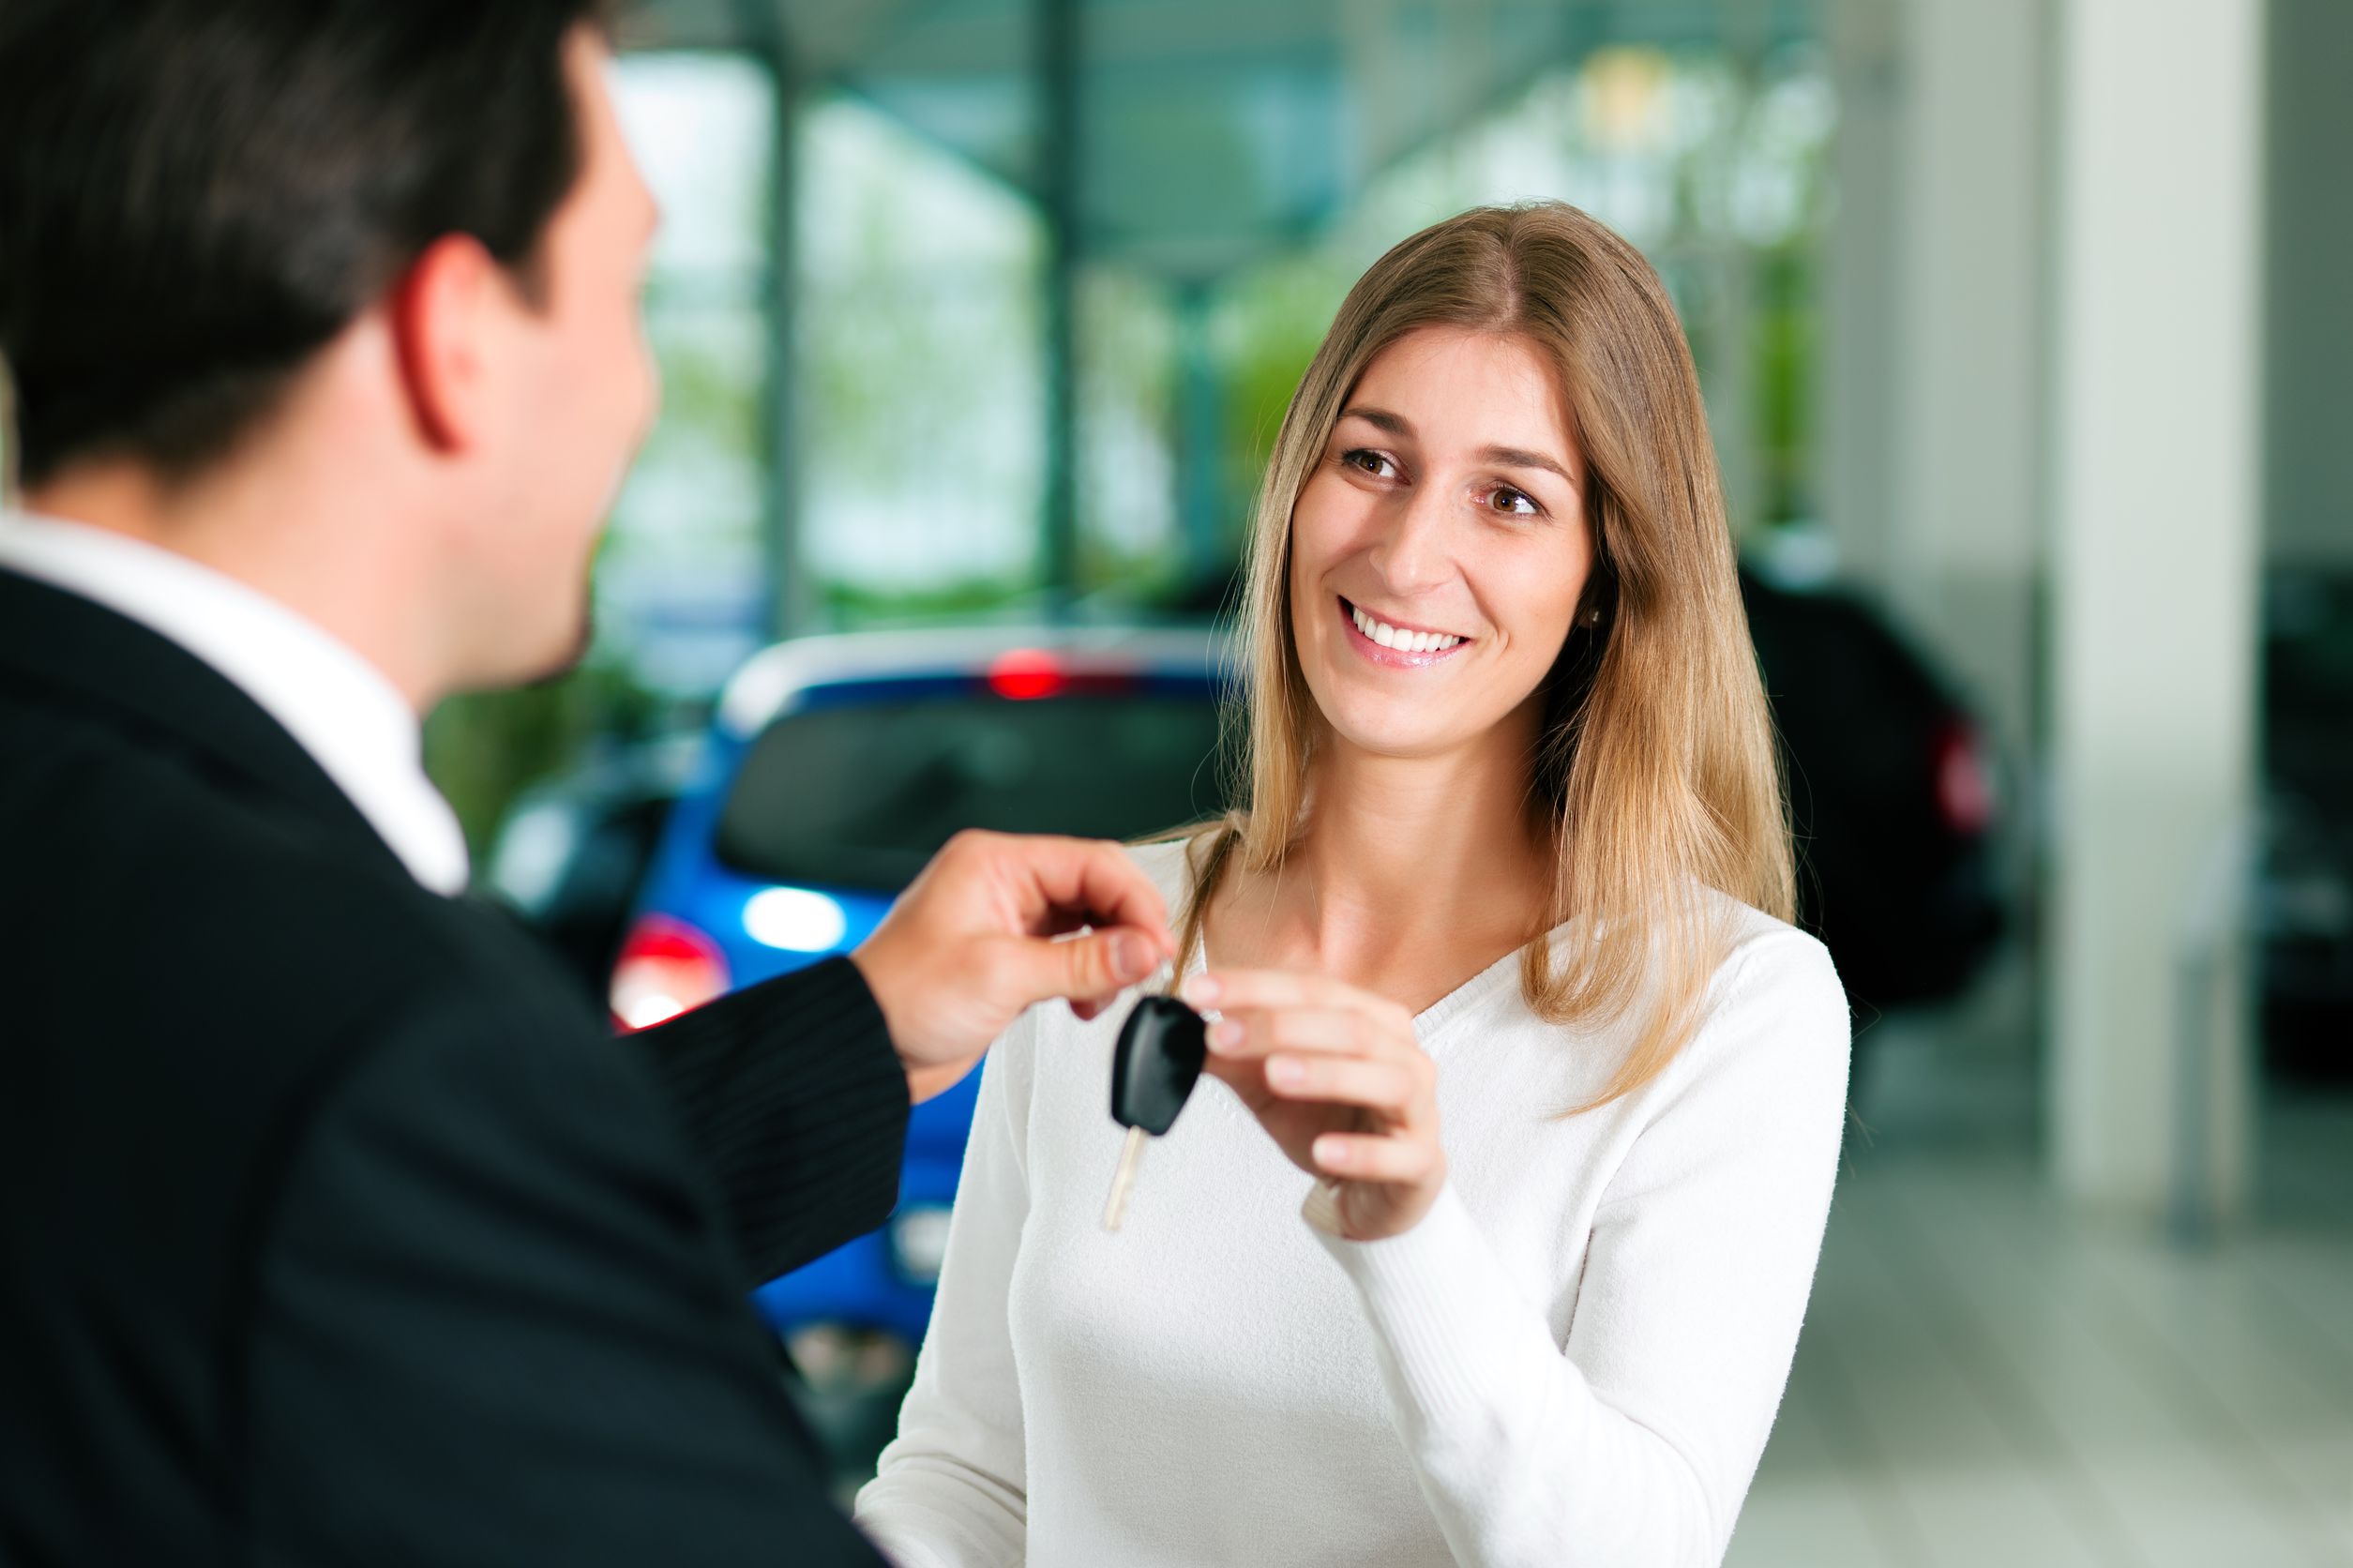 Salesman handing key to woman